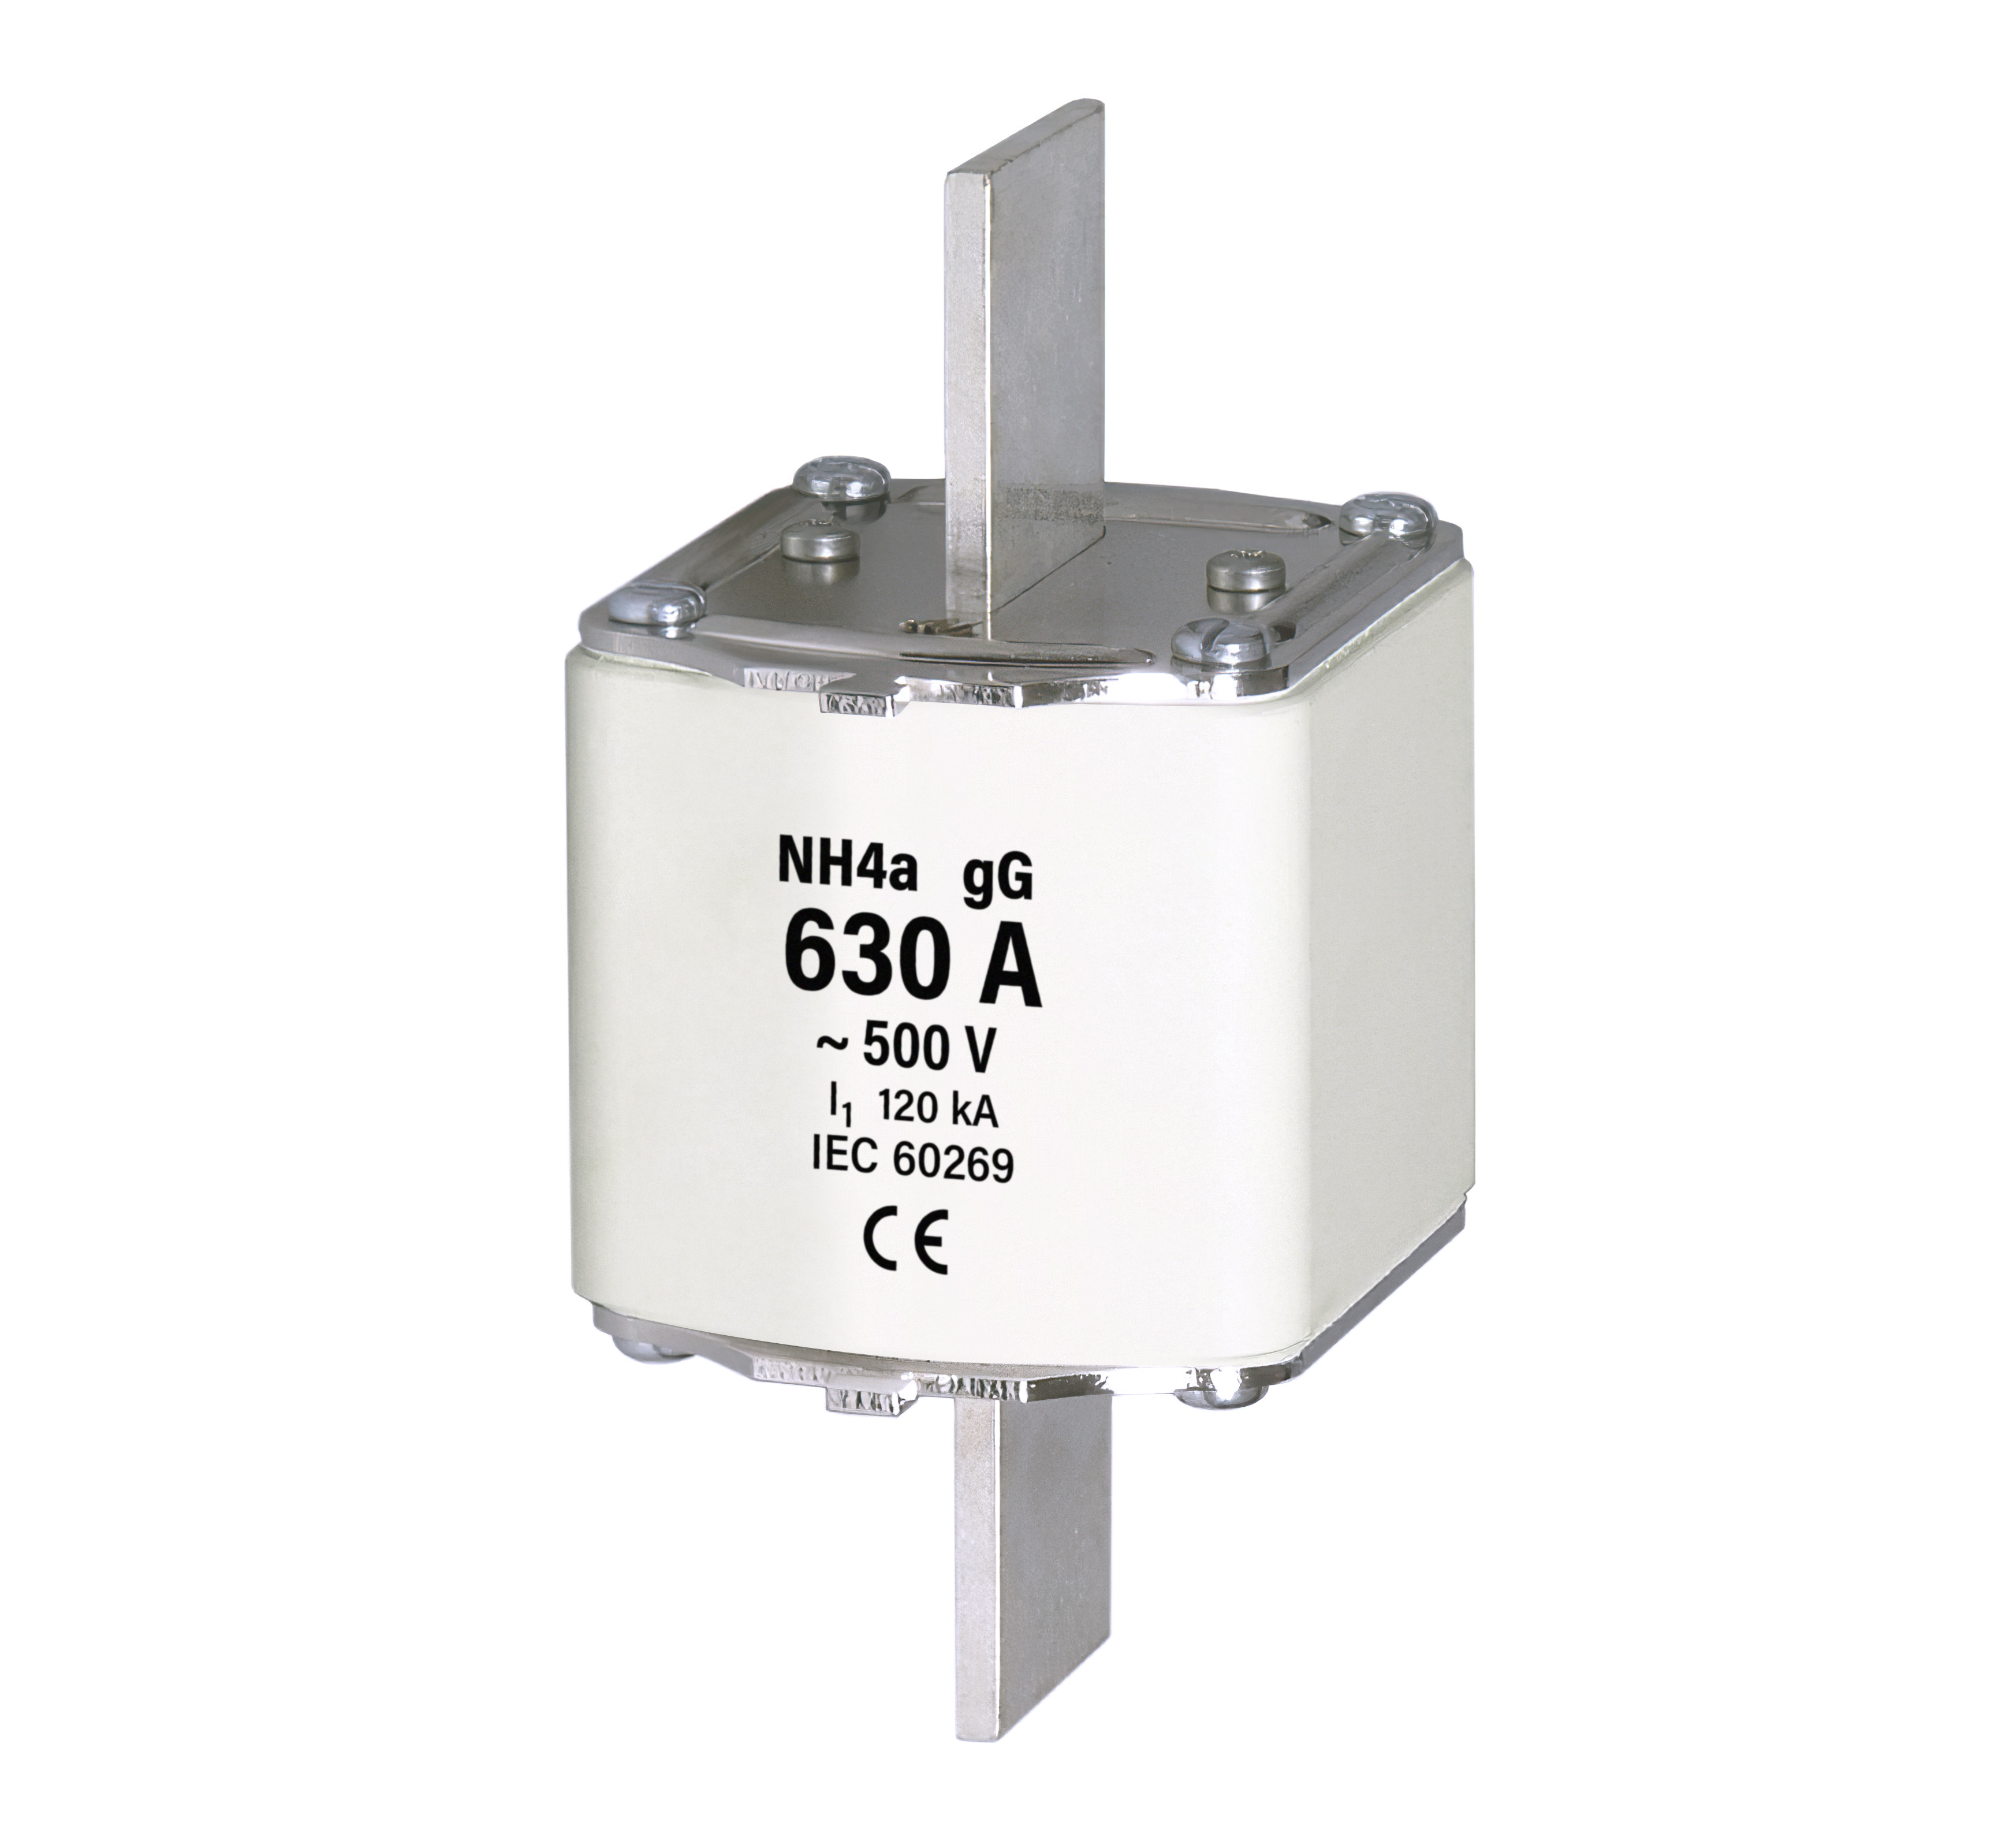 NH4a gG 630A/500V fuse link